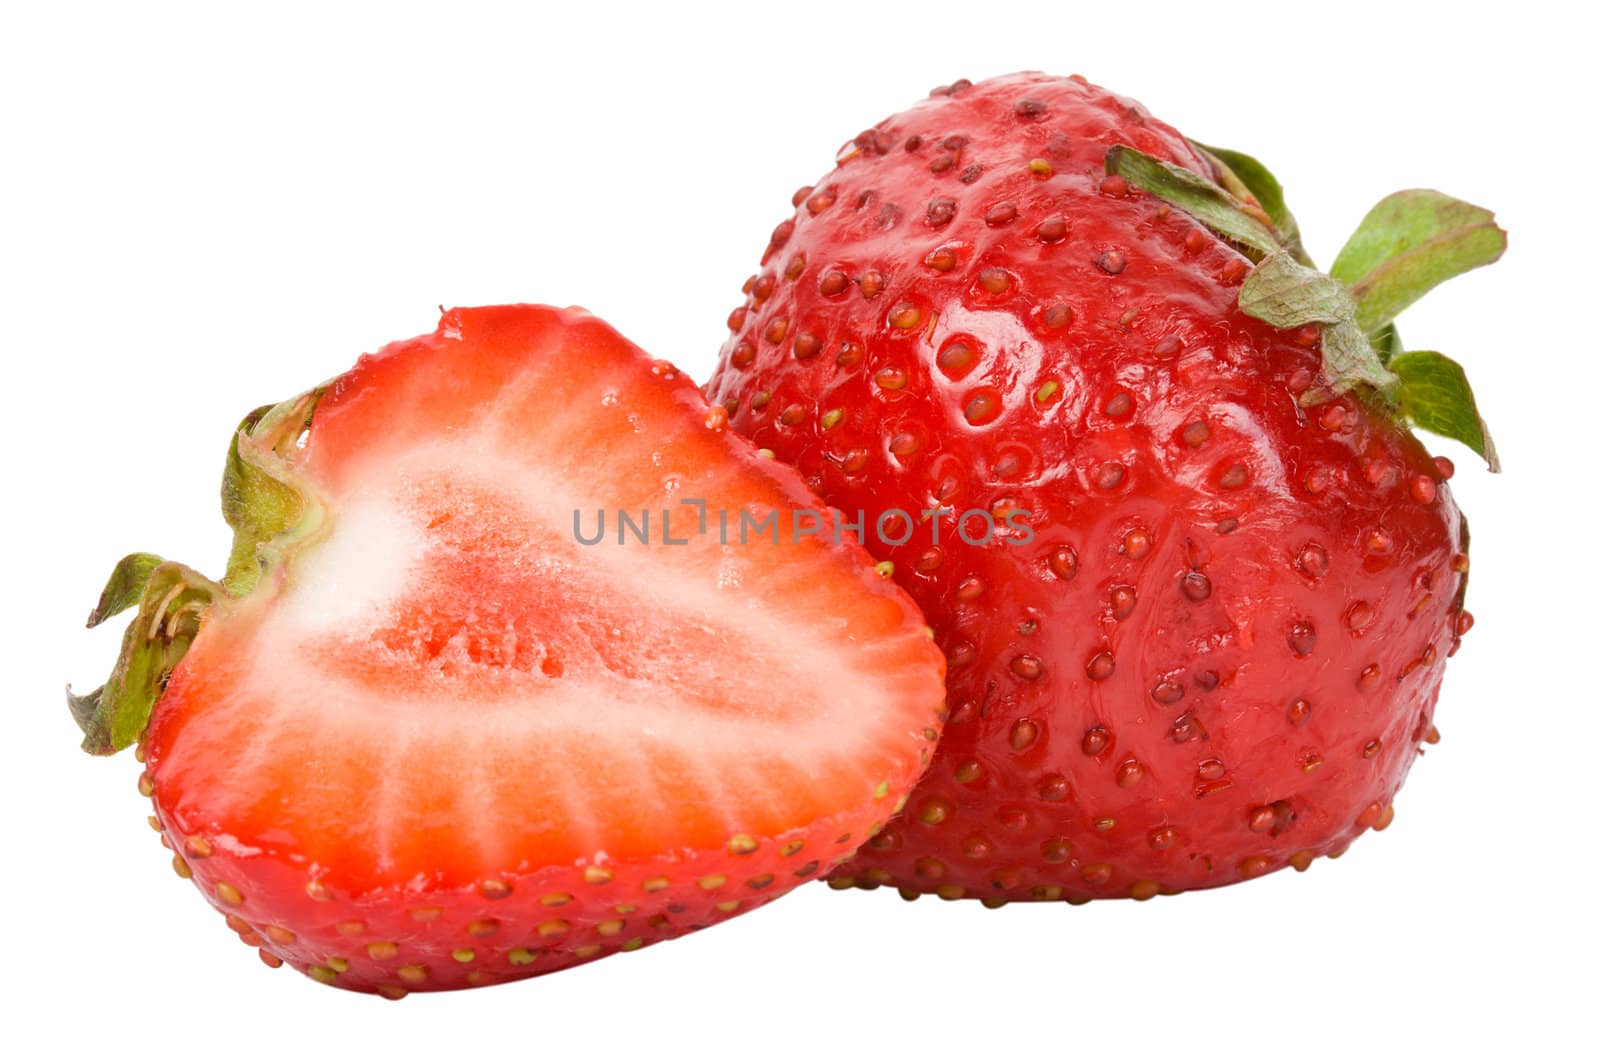 strawberries by Alekcey